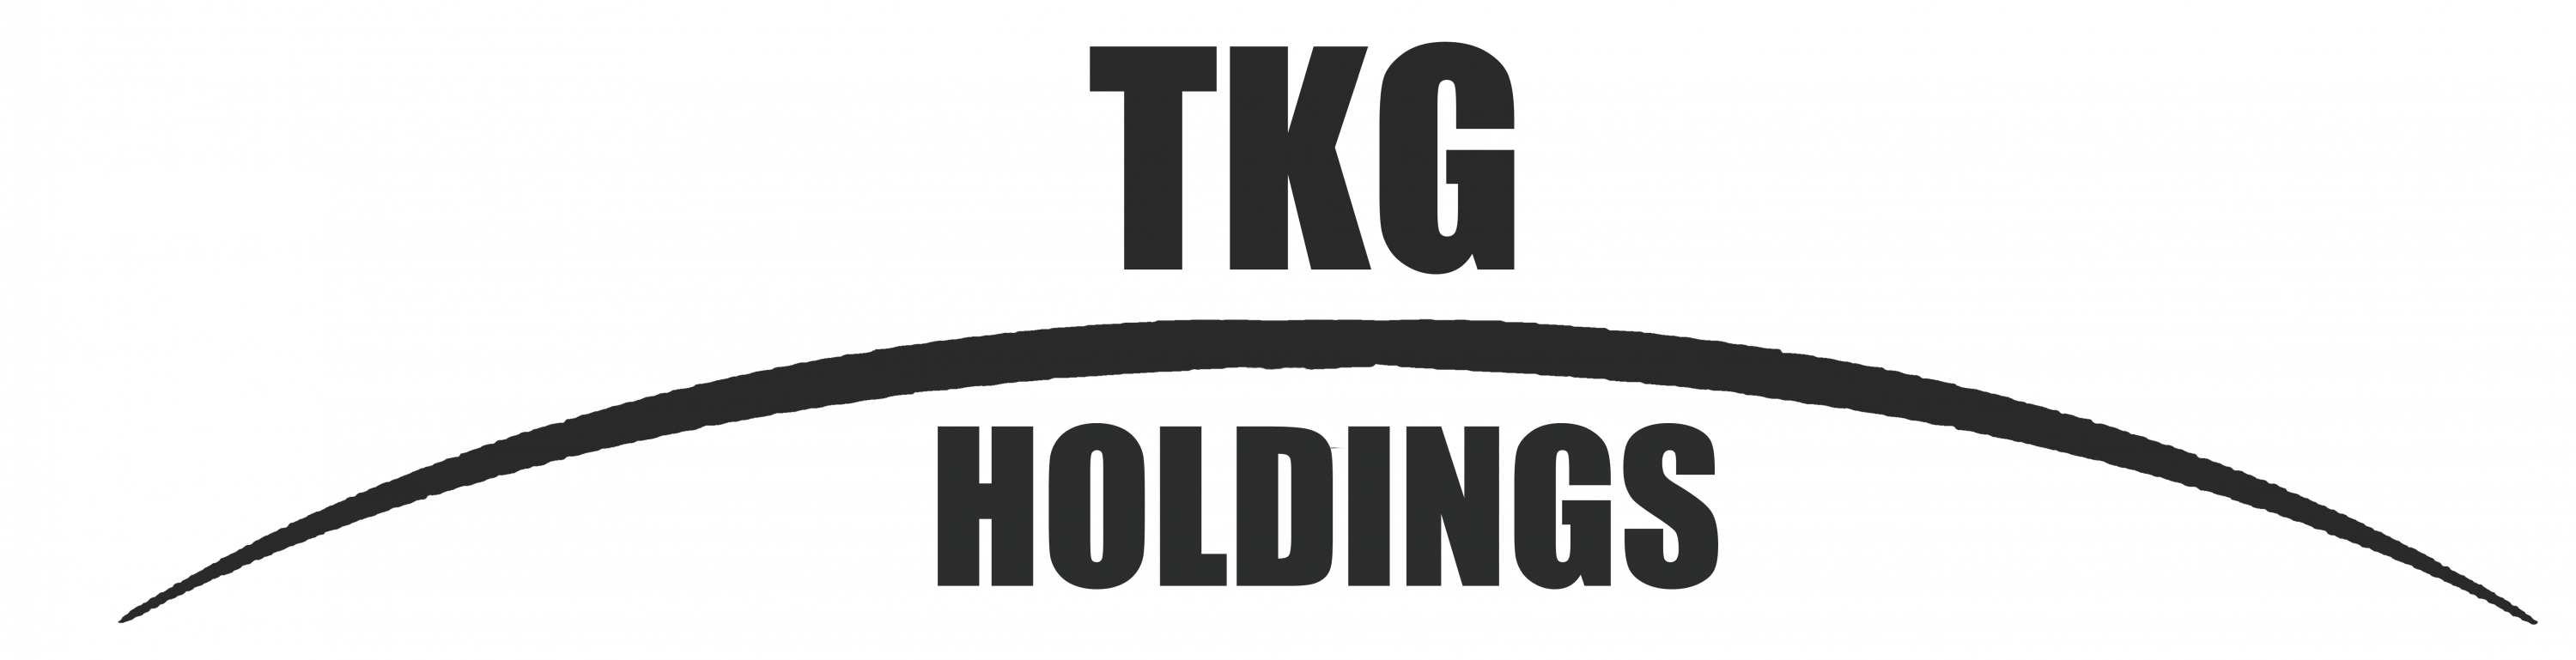 TKG Holdings's Image